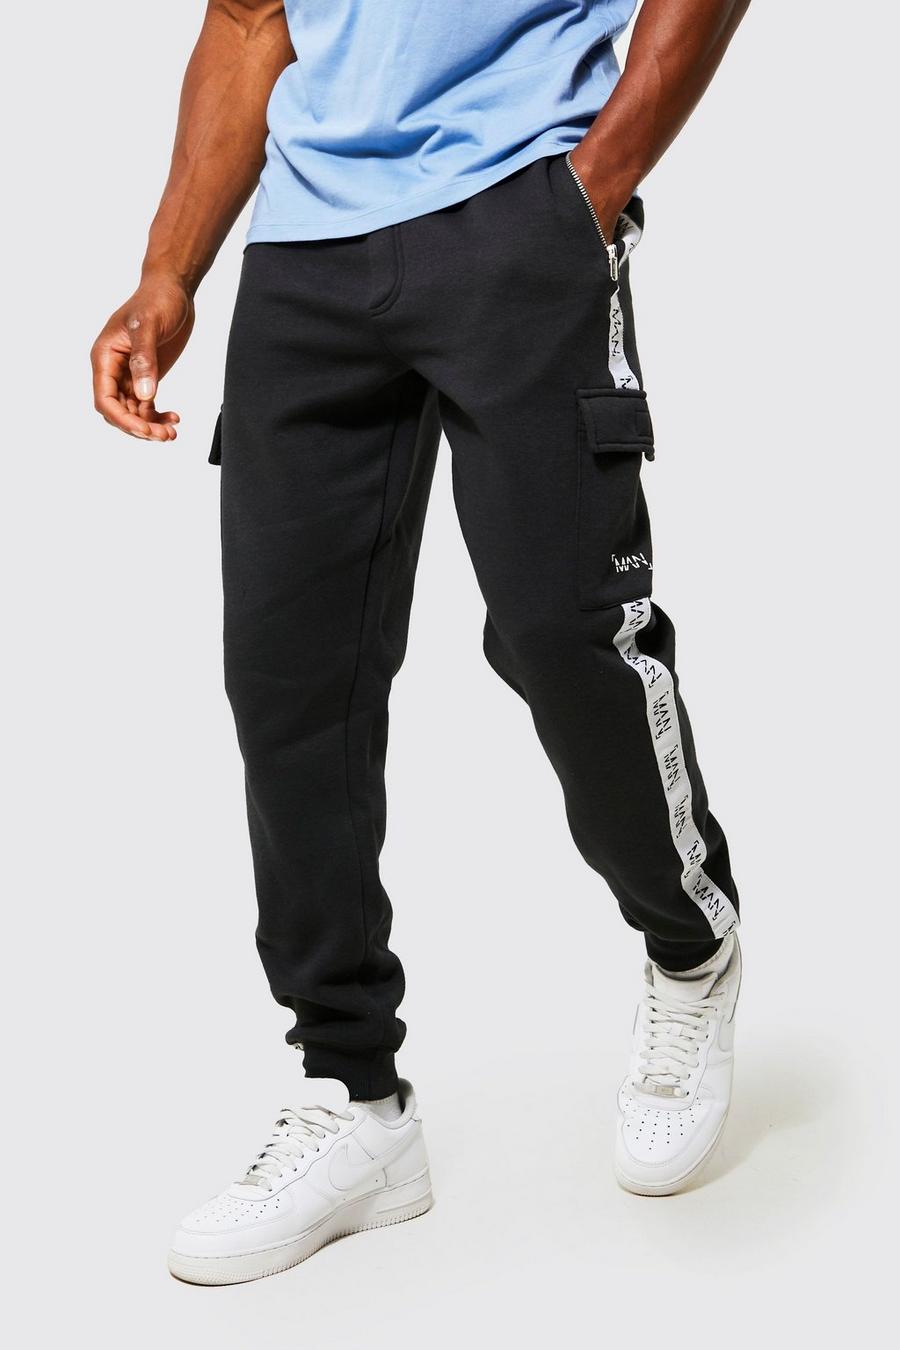 Pantaloni tuta Slim Fit stile Cargo con striscia, Black negro